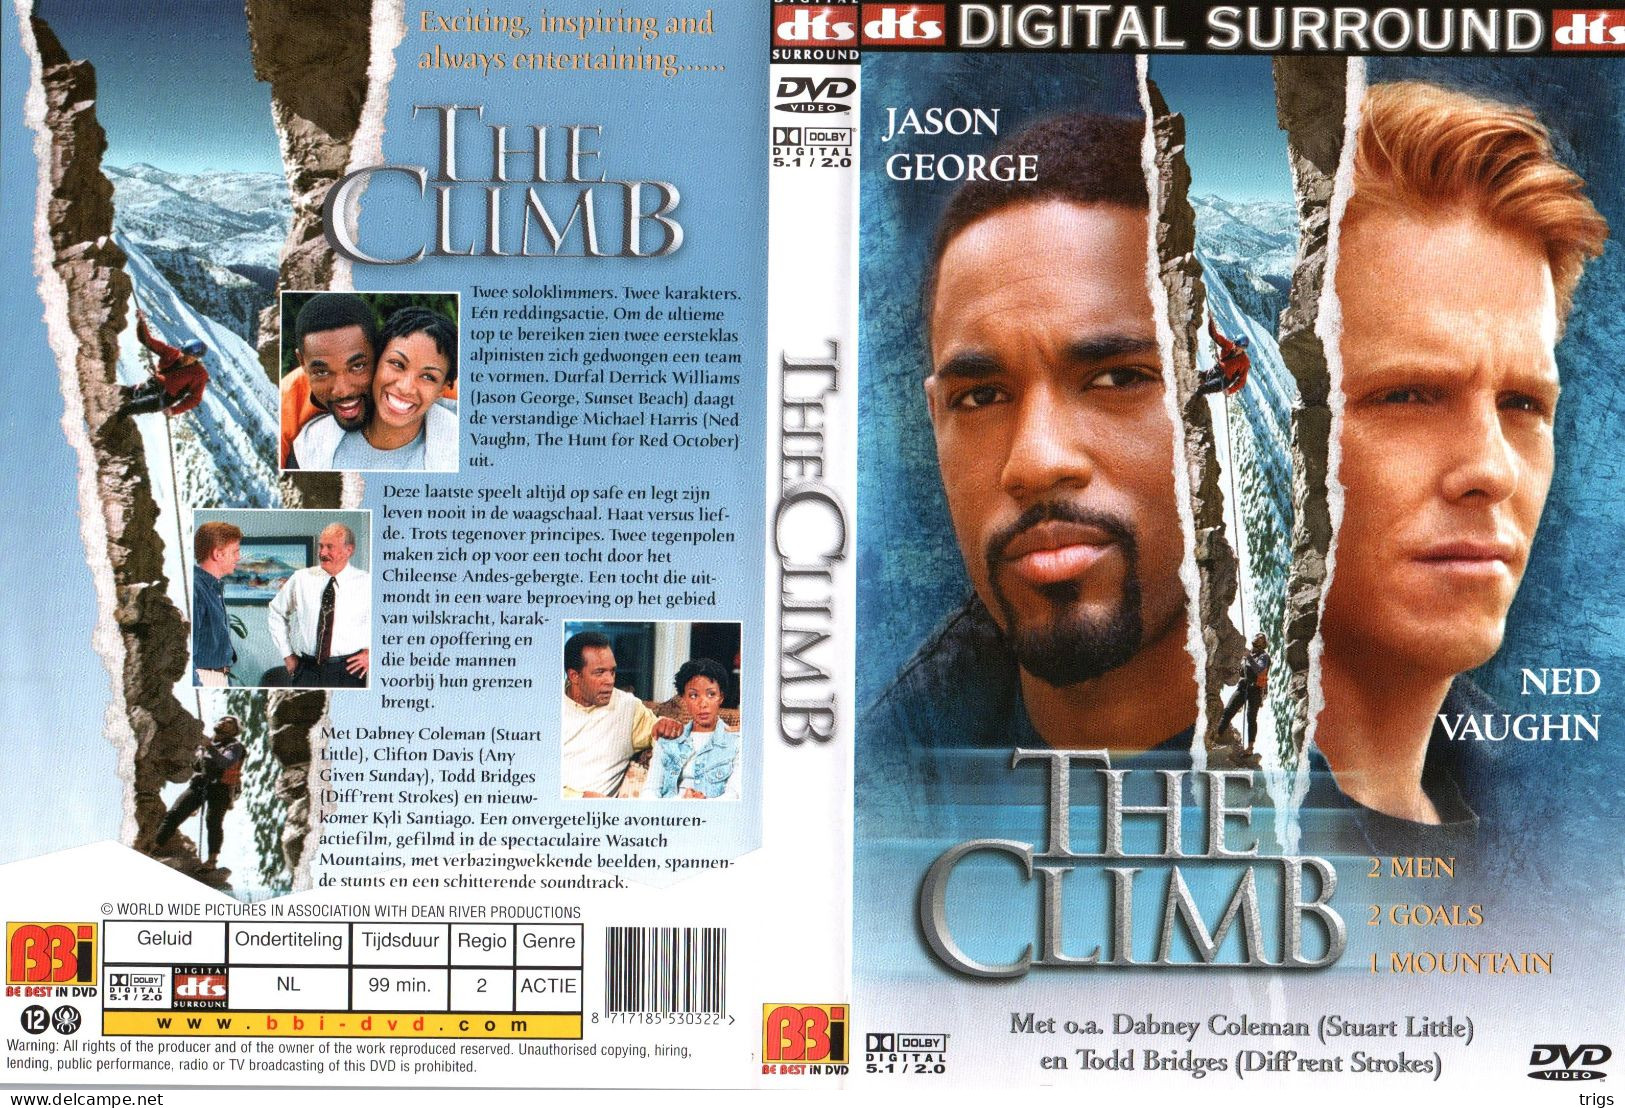 DVD - The Climb - Action, Adventure